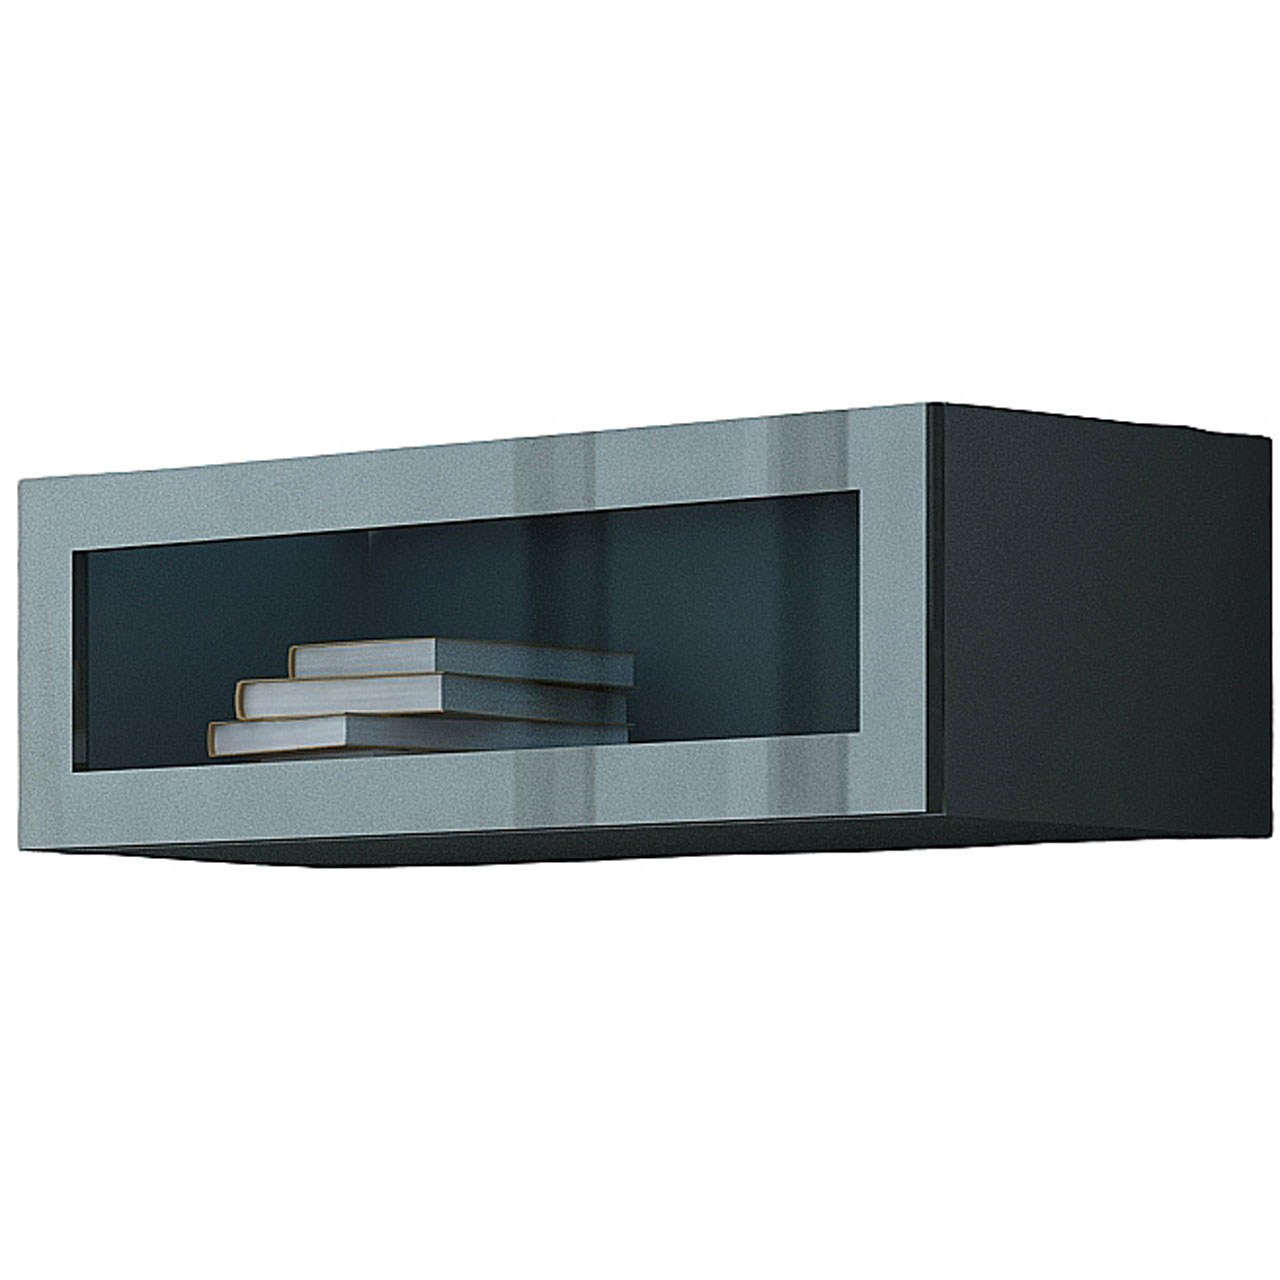 Wall display cabinet 90 VIGO GREY C VG6 grey / grey gloss